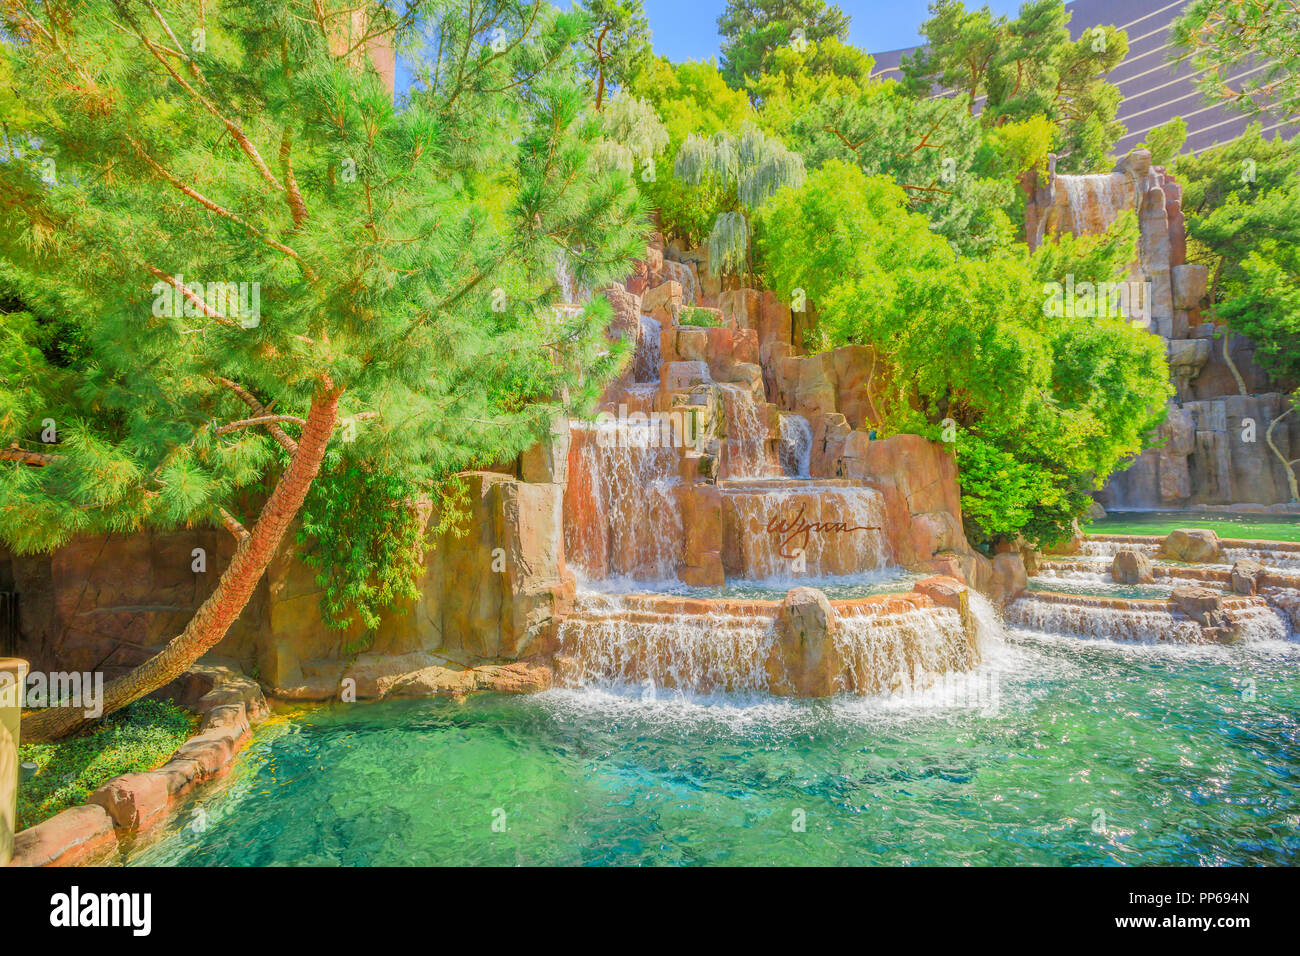 Las Vegas, Nevada, United States - August 18, 2018: closeup of Wynn Las Vegas Waterfall Fountain in the garden outdoors in blue sky day. The Wynn is Resort Hotel Casino 5-star, Las Vegas Strip. Stock Photo